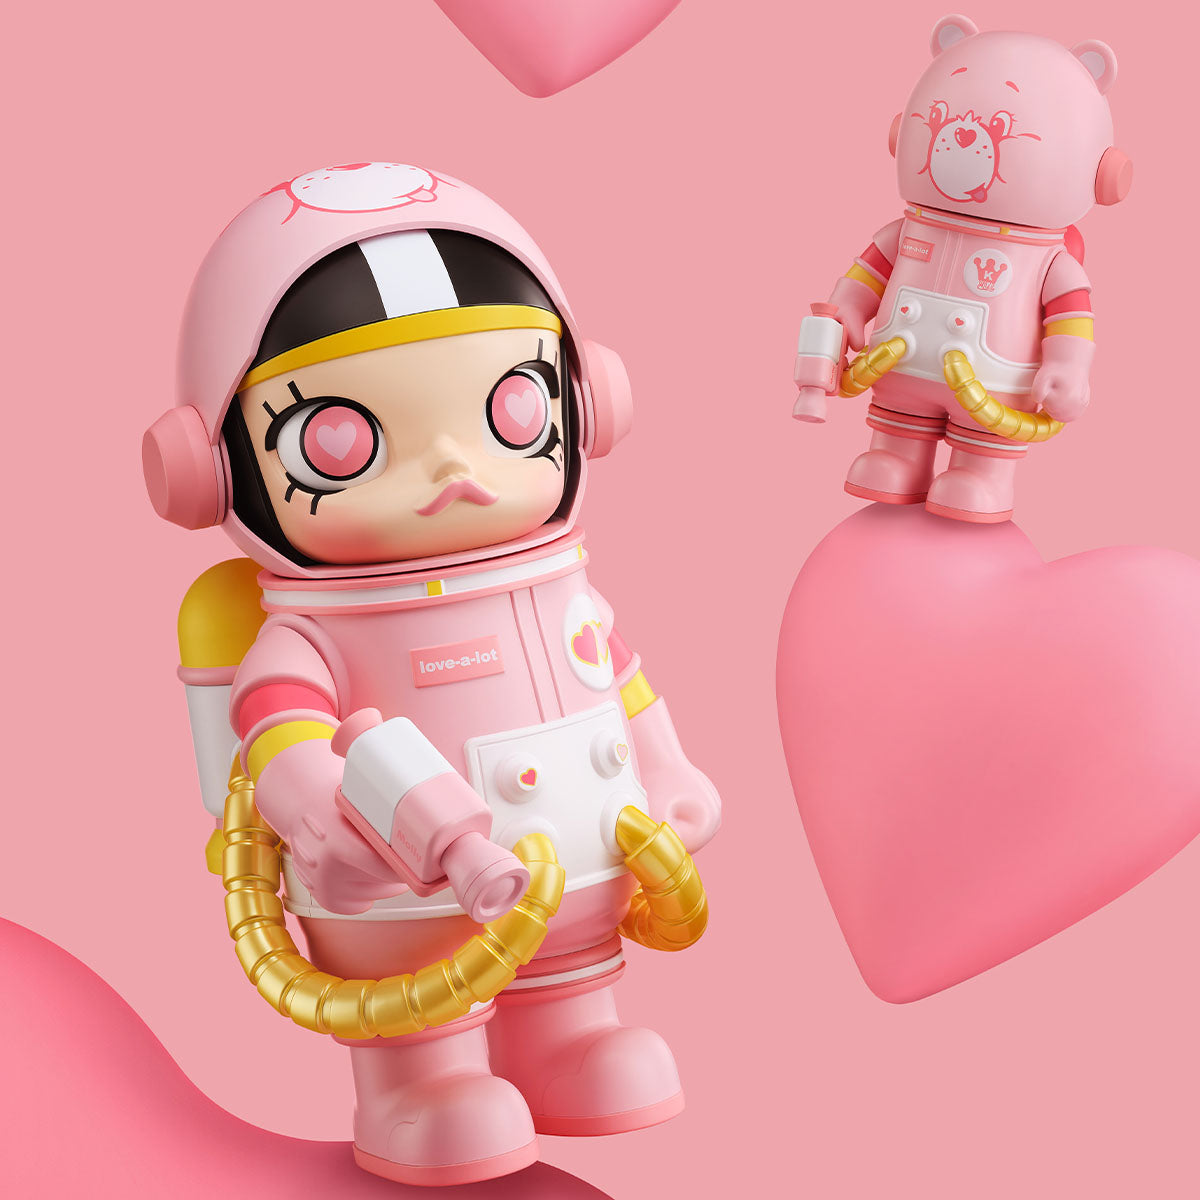 675652molly teddy love ピンク 32㎝ 日本限定